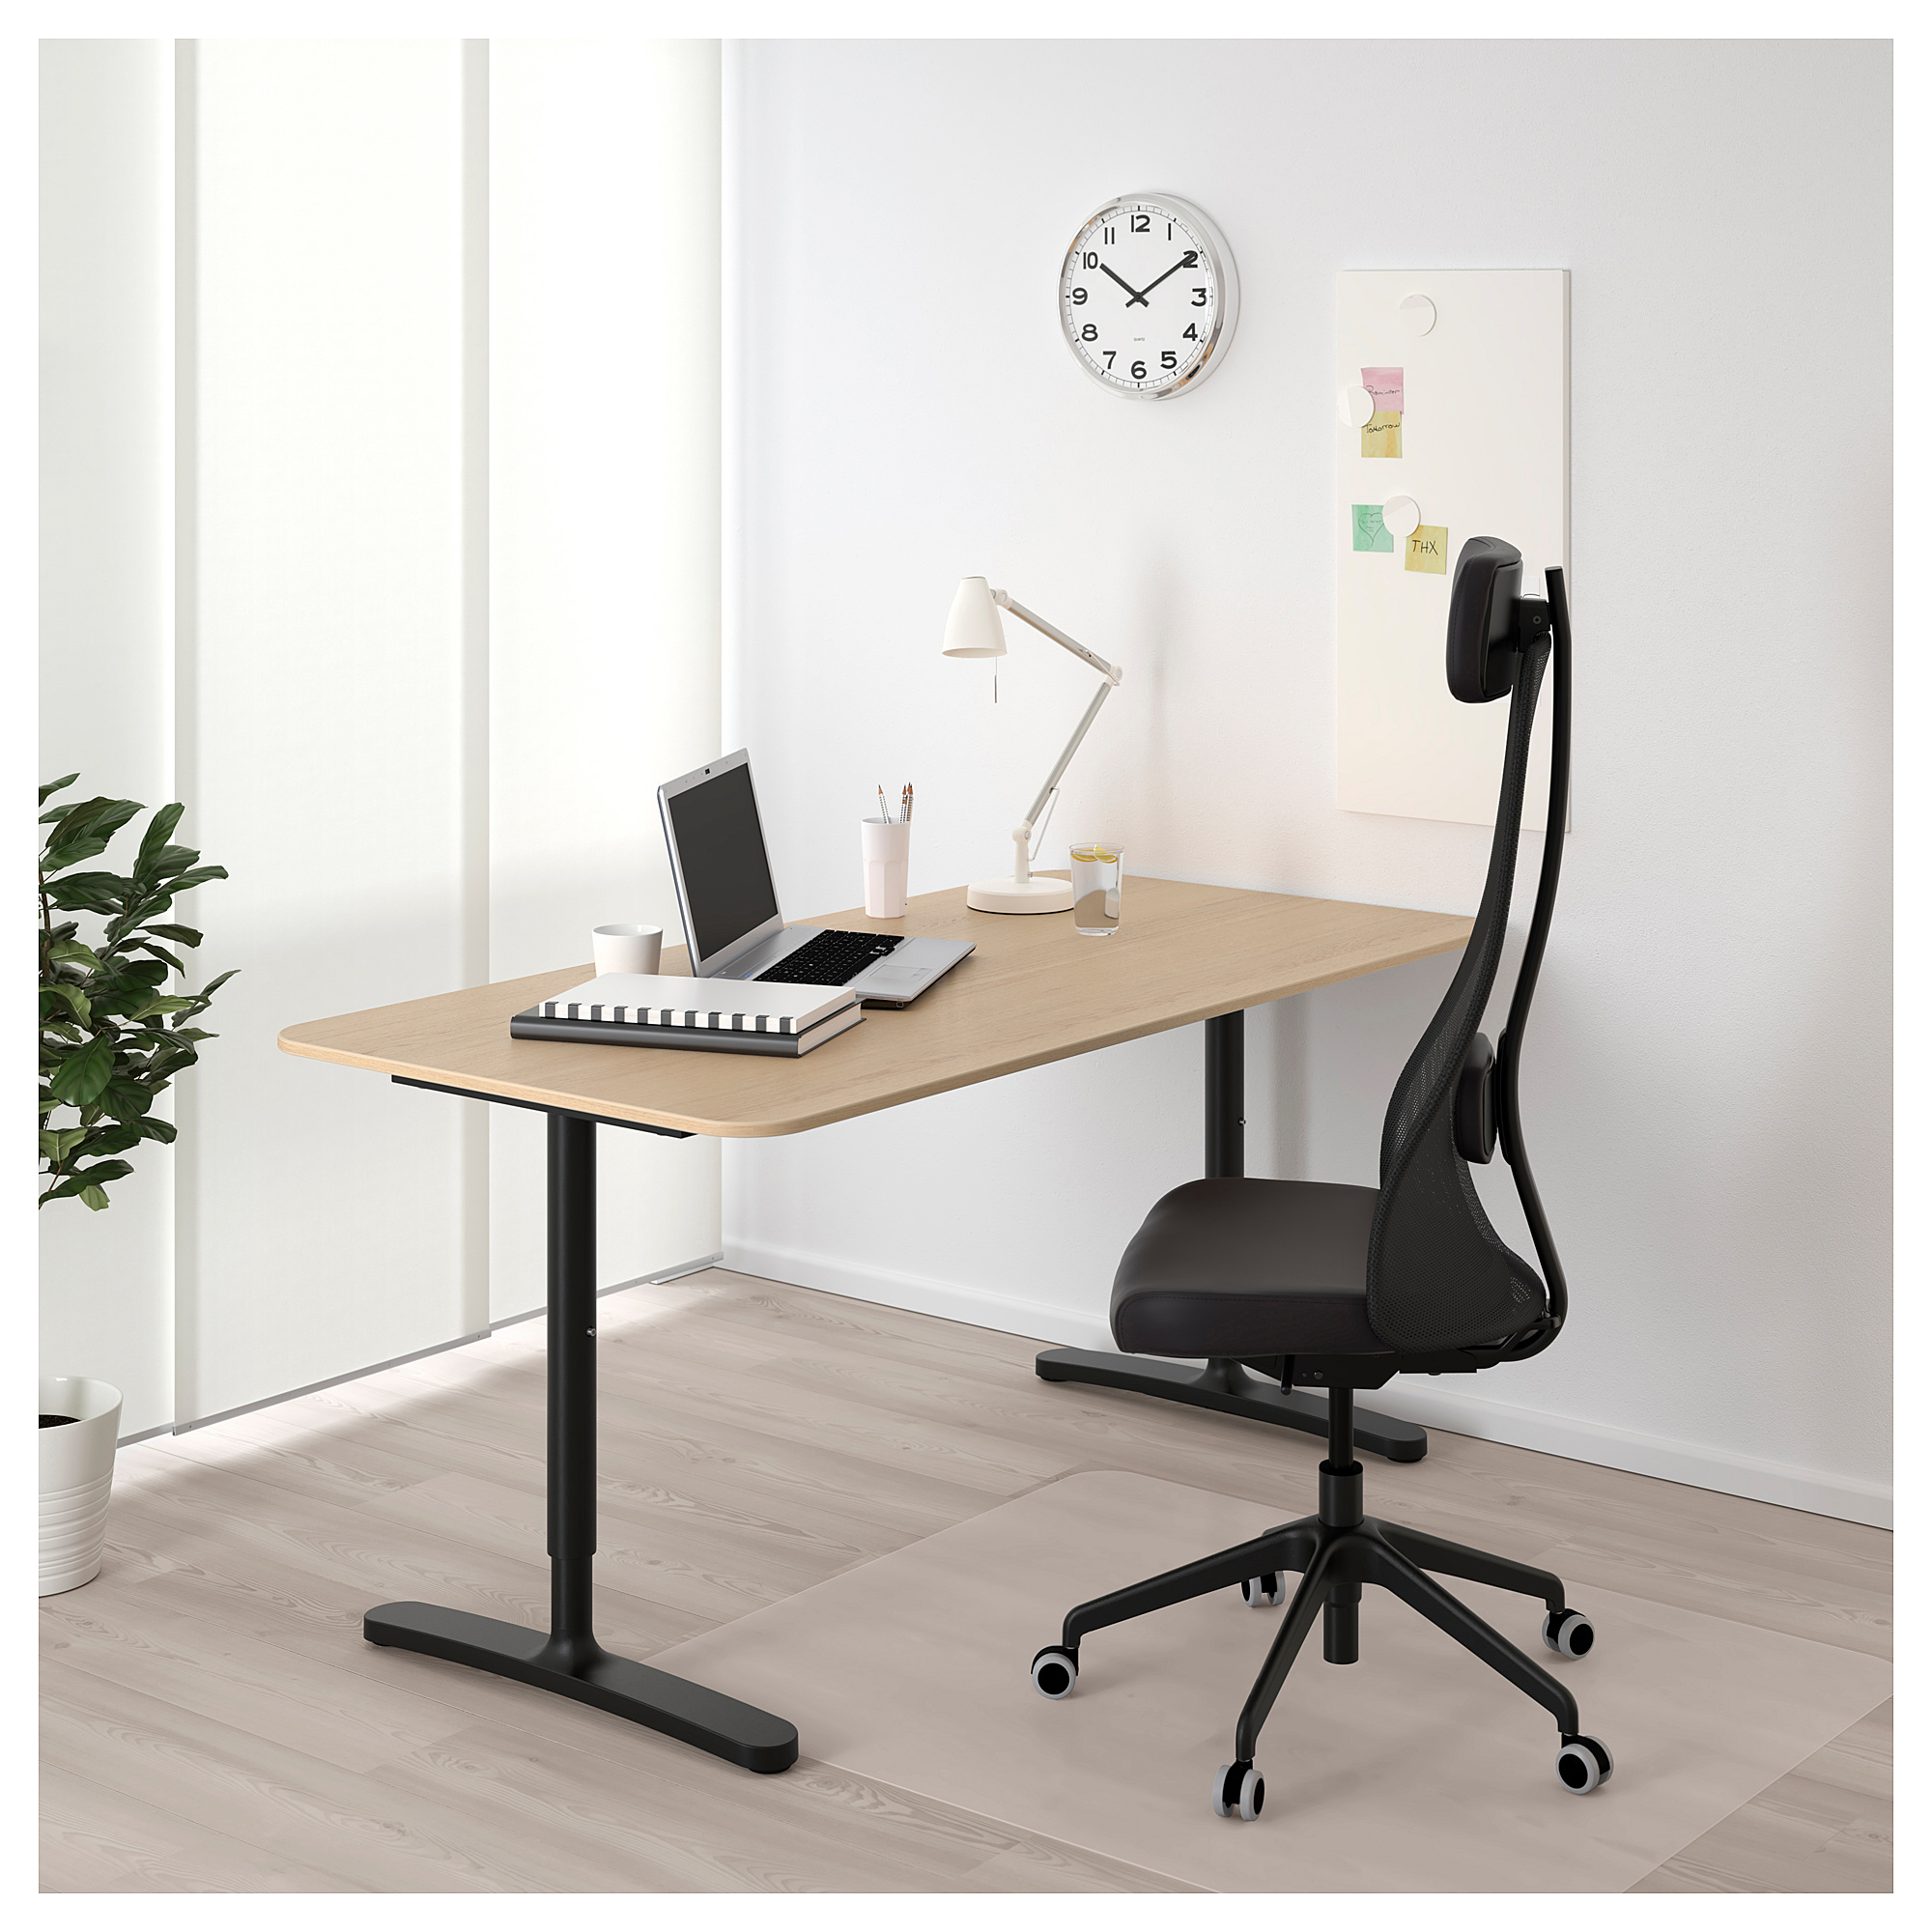 BEKANT - 書桌/工作桌, 實木貼皮, 染白橡木/黑色 | IKEA 台灣